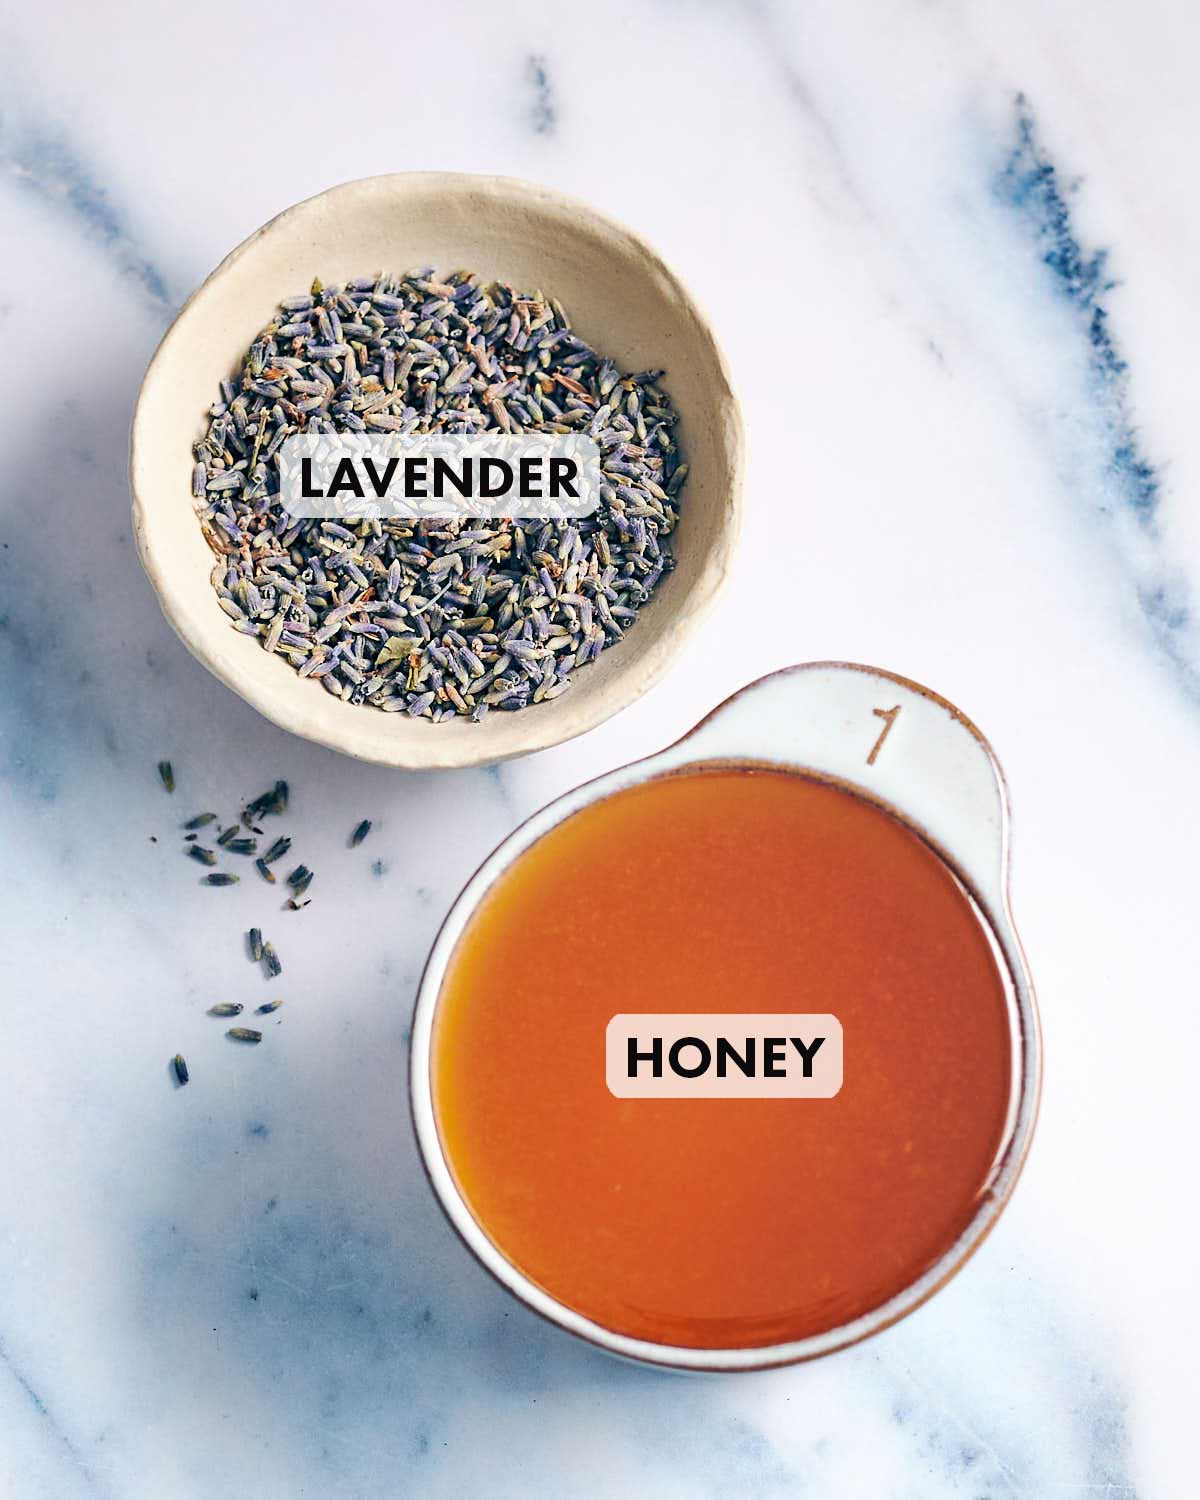 Ingredients to make infused lavender honey including dried lavender.